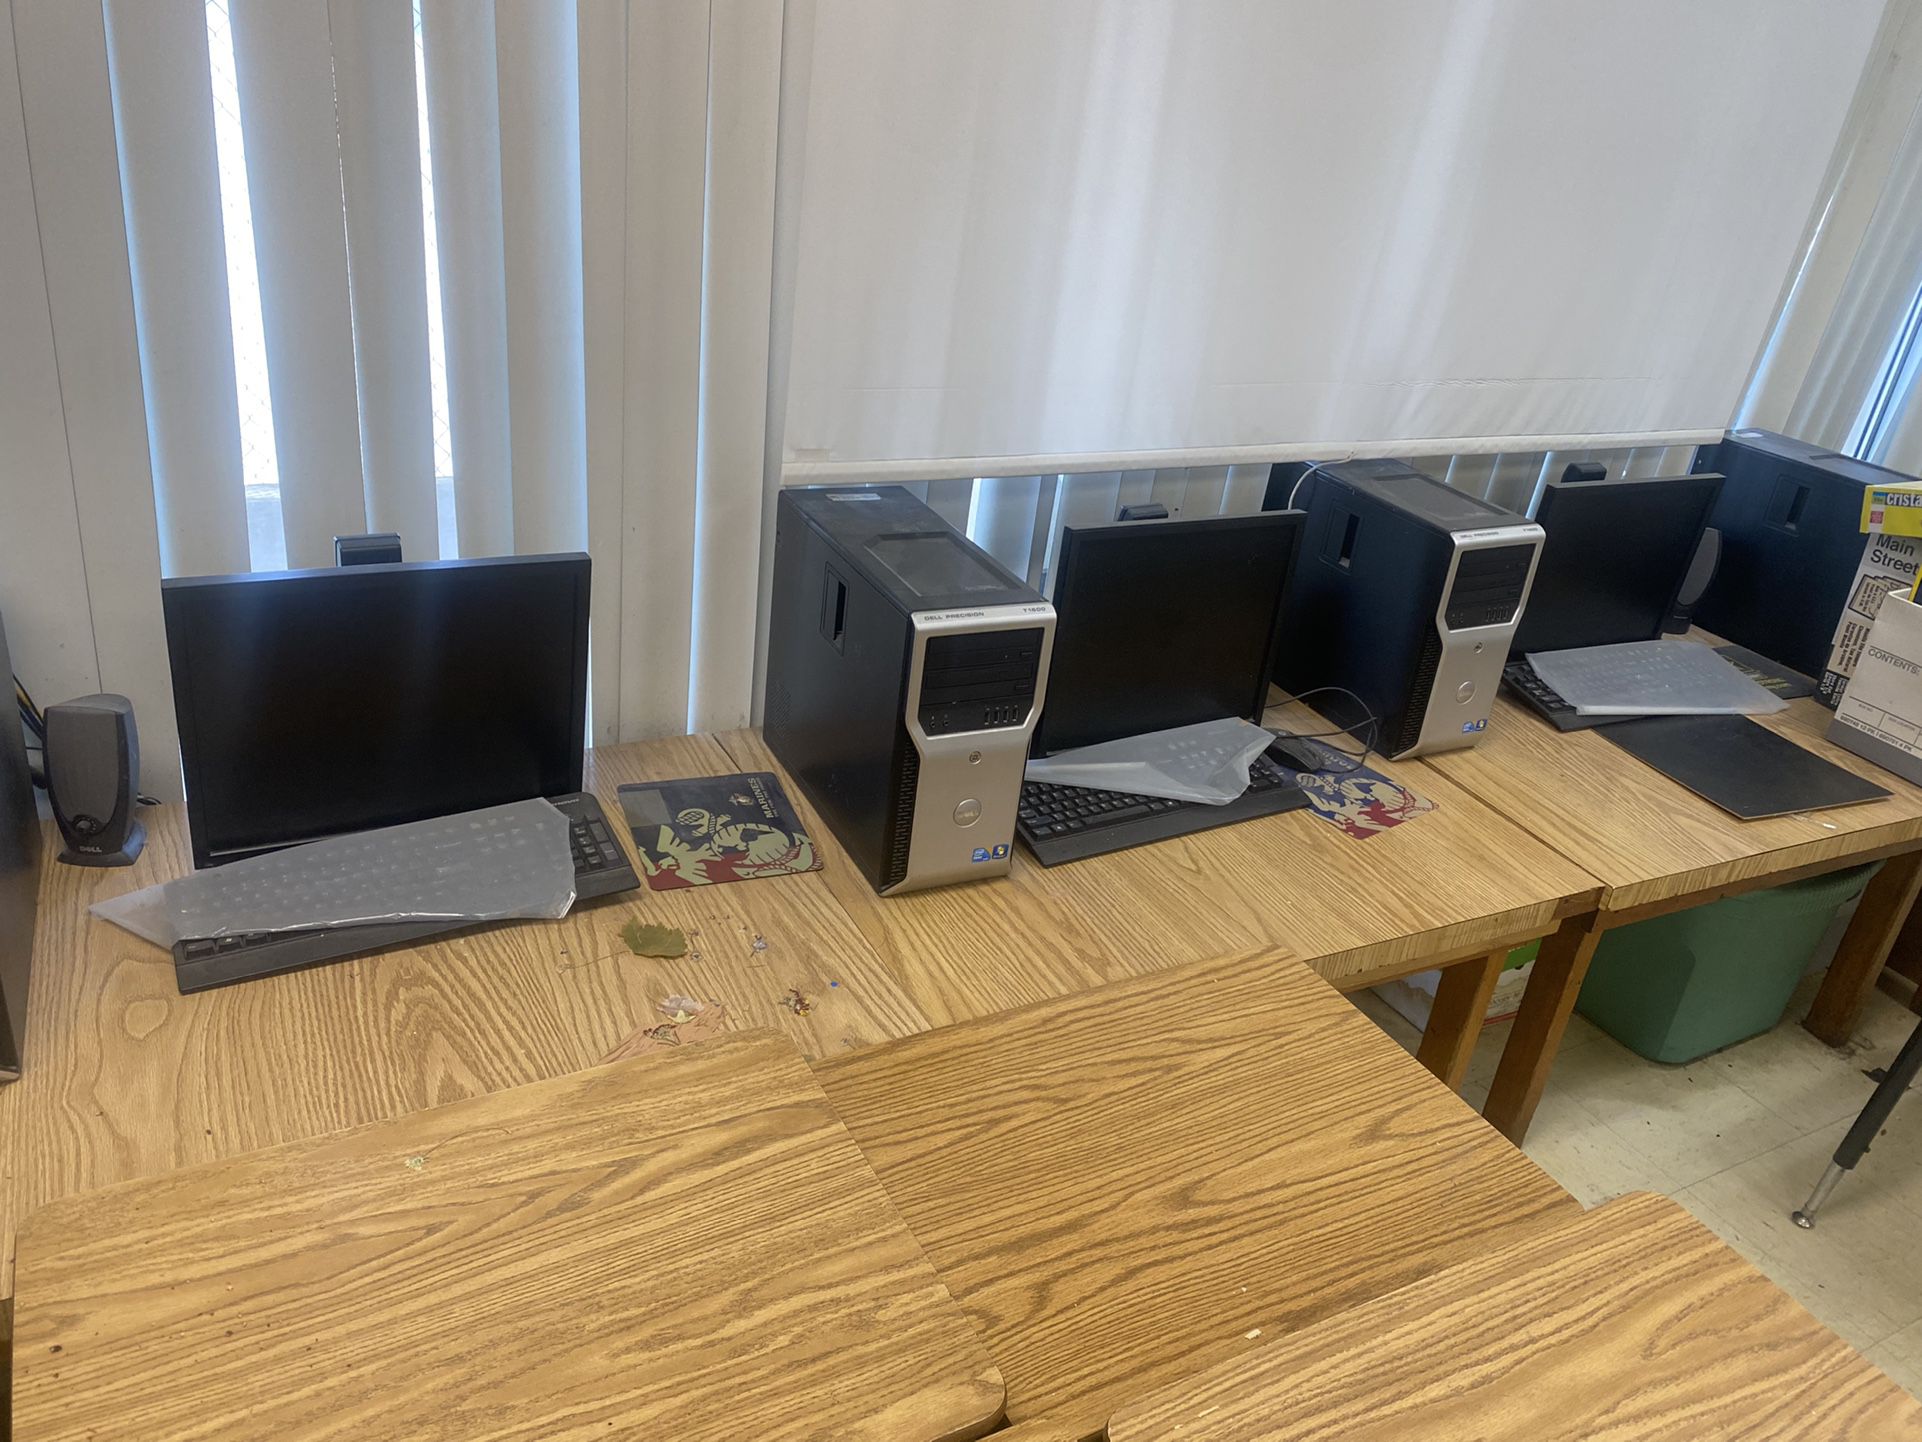 5 Computers And Monitors! 